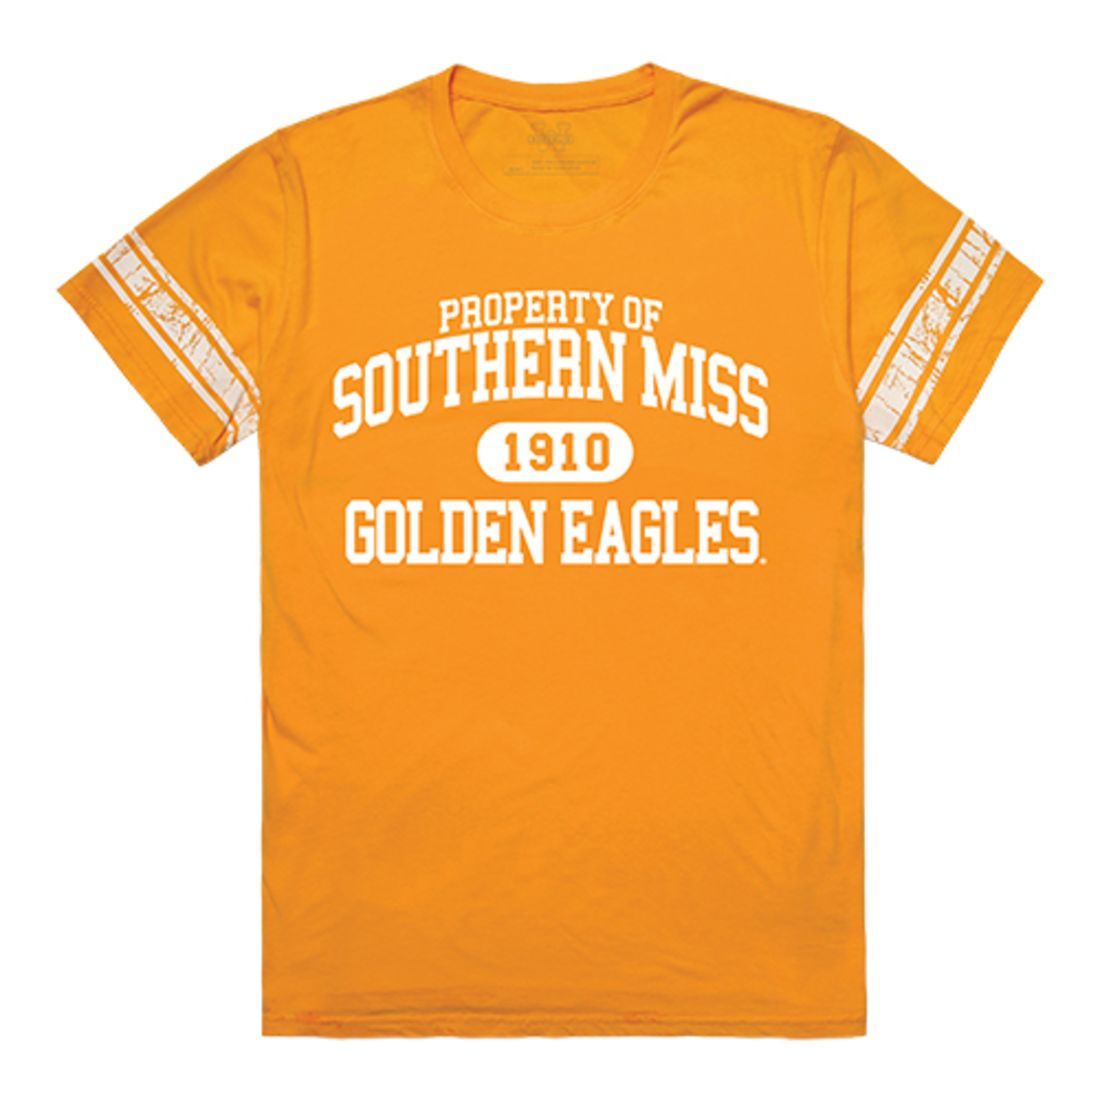 W Republic USM University of Southern Mississippi Golden Eagles Property T-Shirt Gold, Large